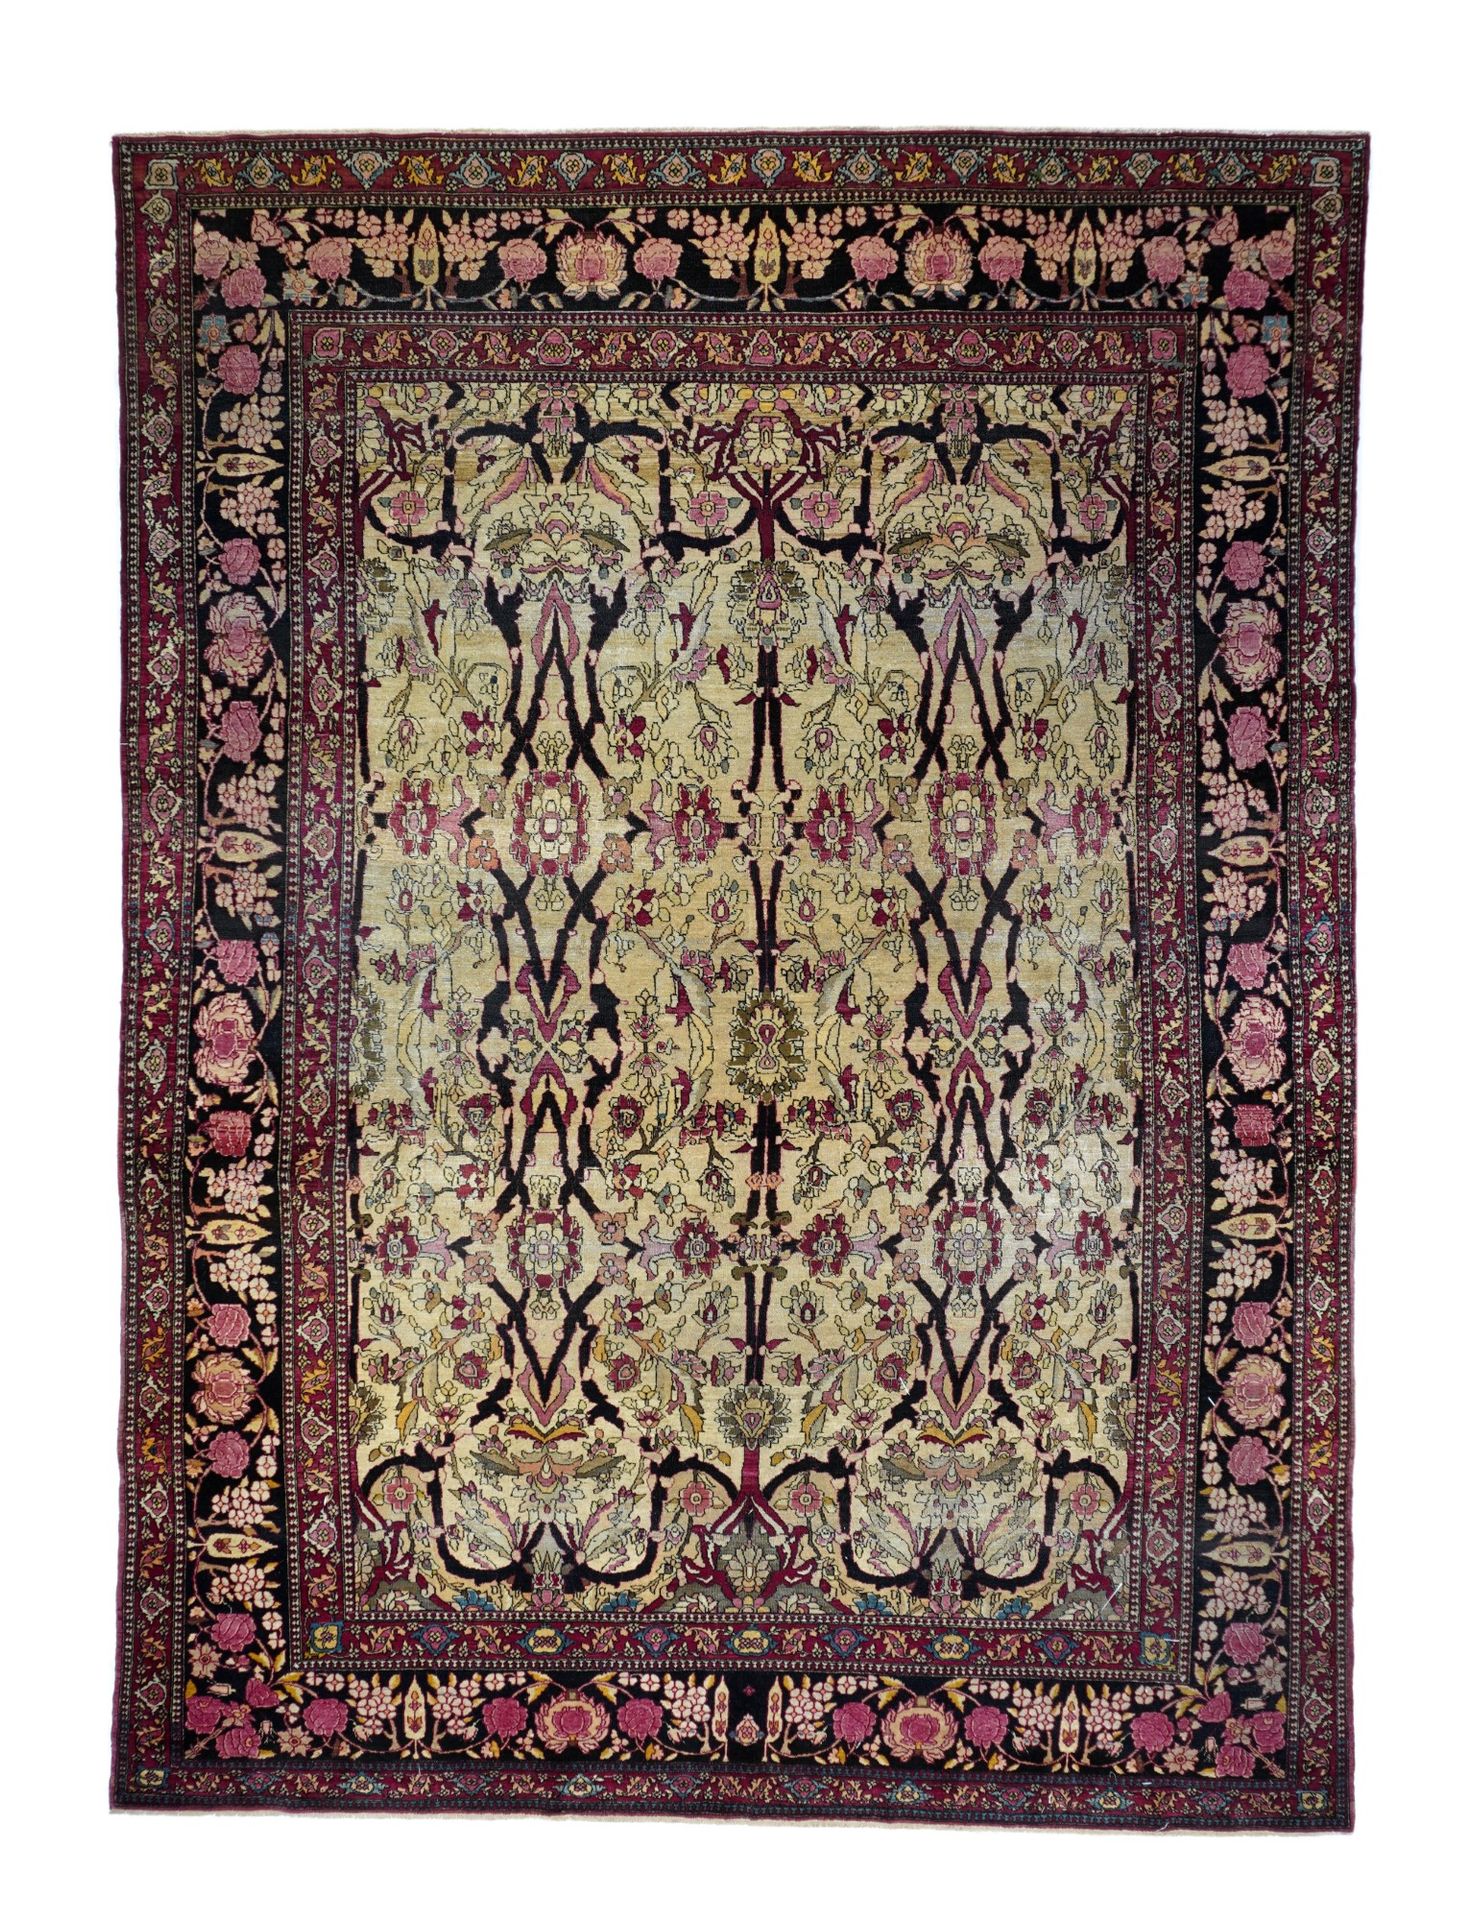 Null 古董德黑兰地毯，9' x 12'9" (2.74 x 3.89 M)